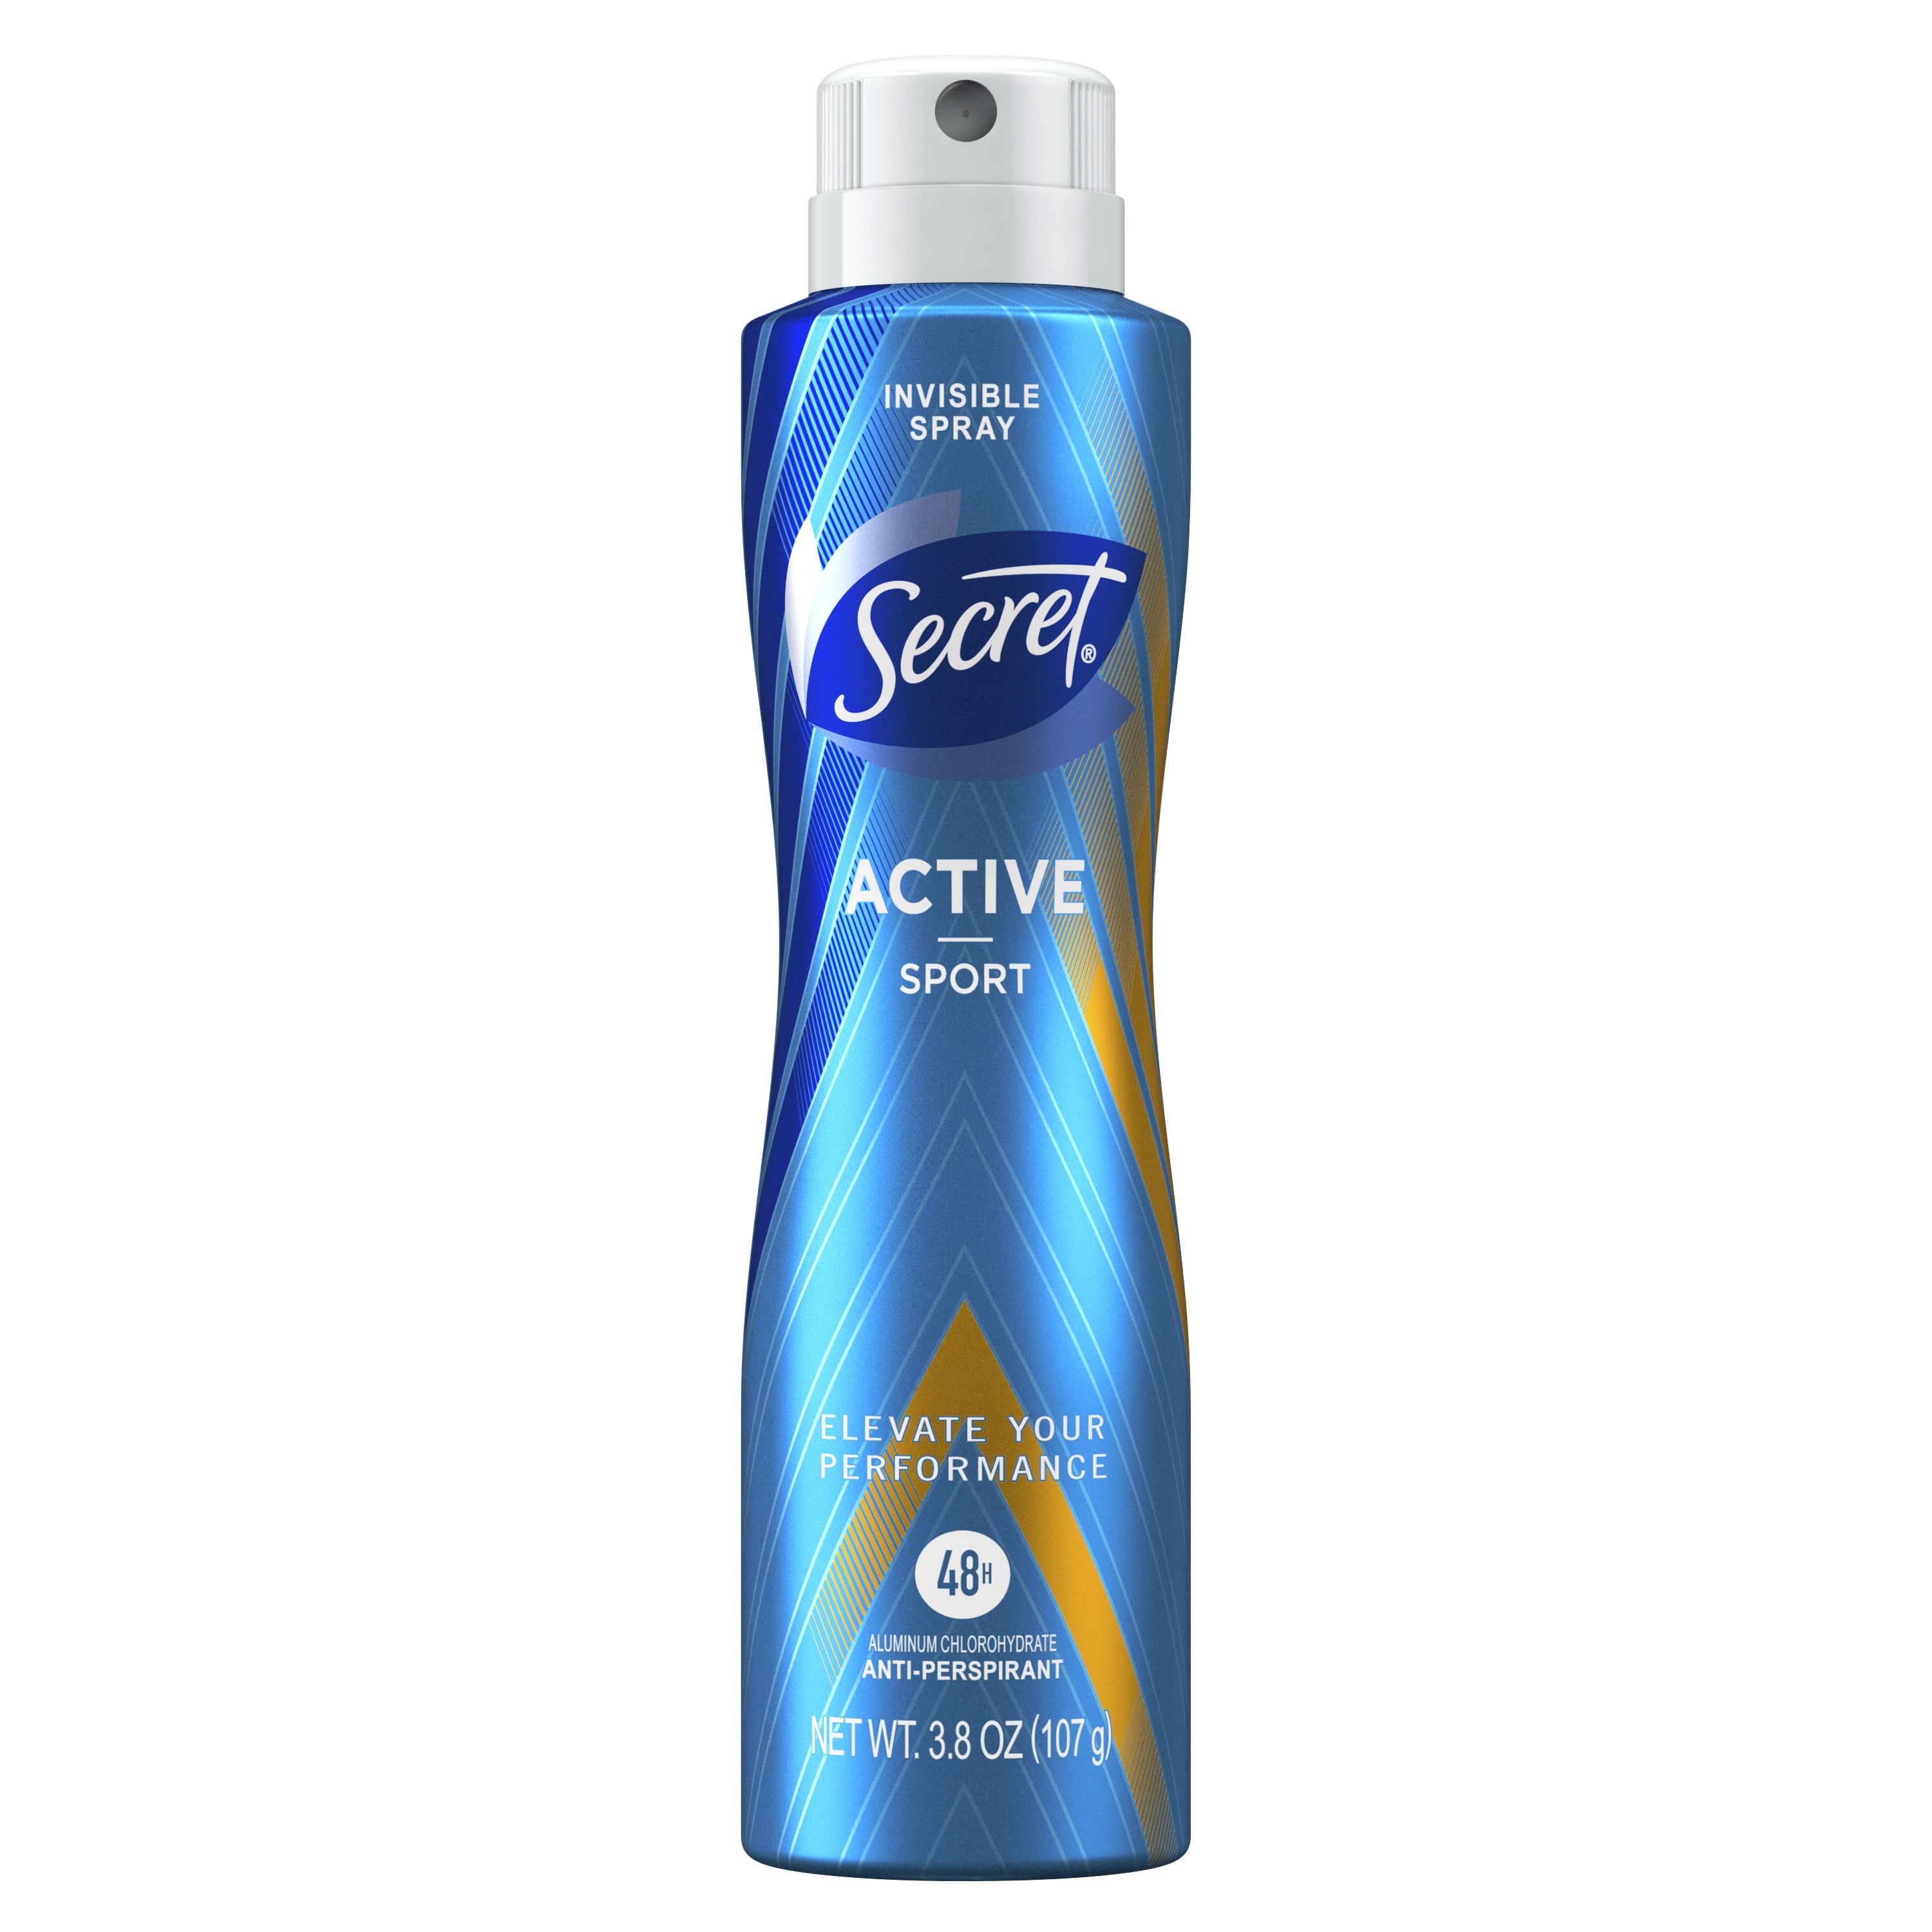 Secret Invisible Spray Antiperspirant Deodorant for Women Active Sport 3.8  Oz